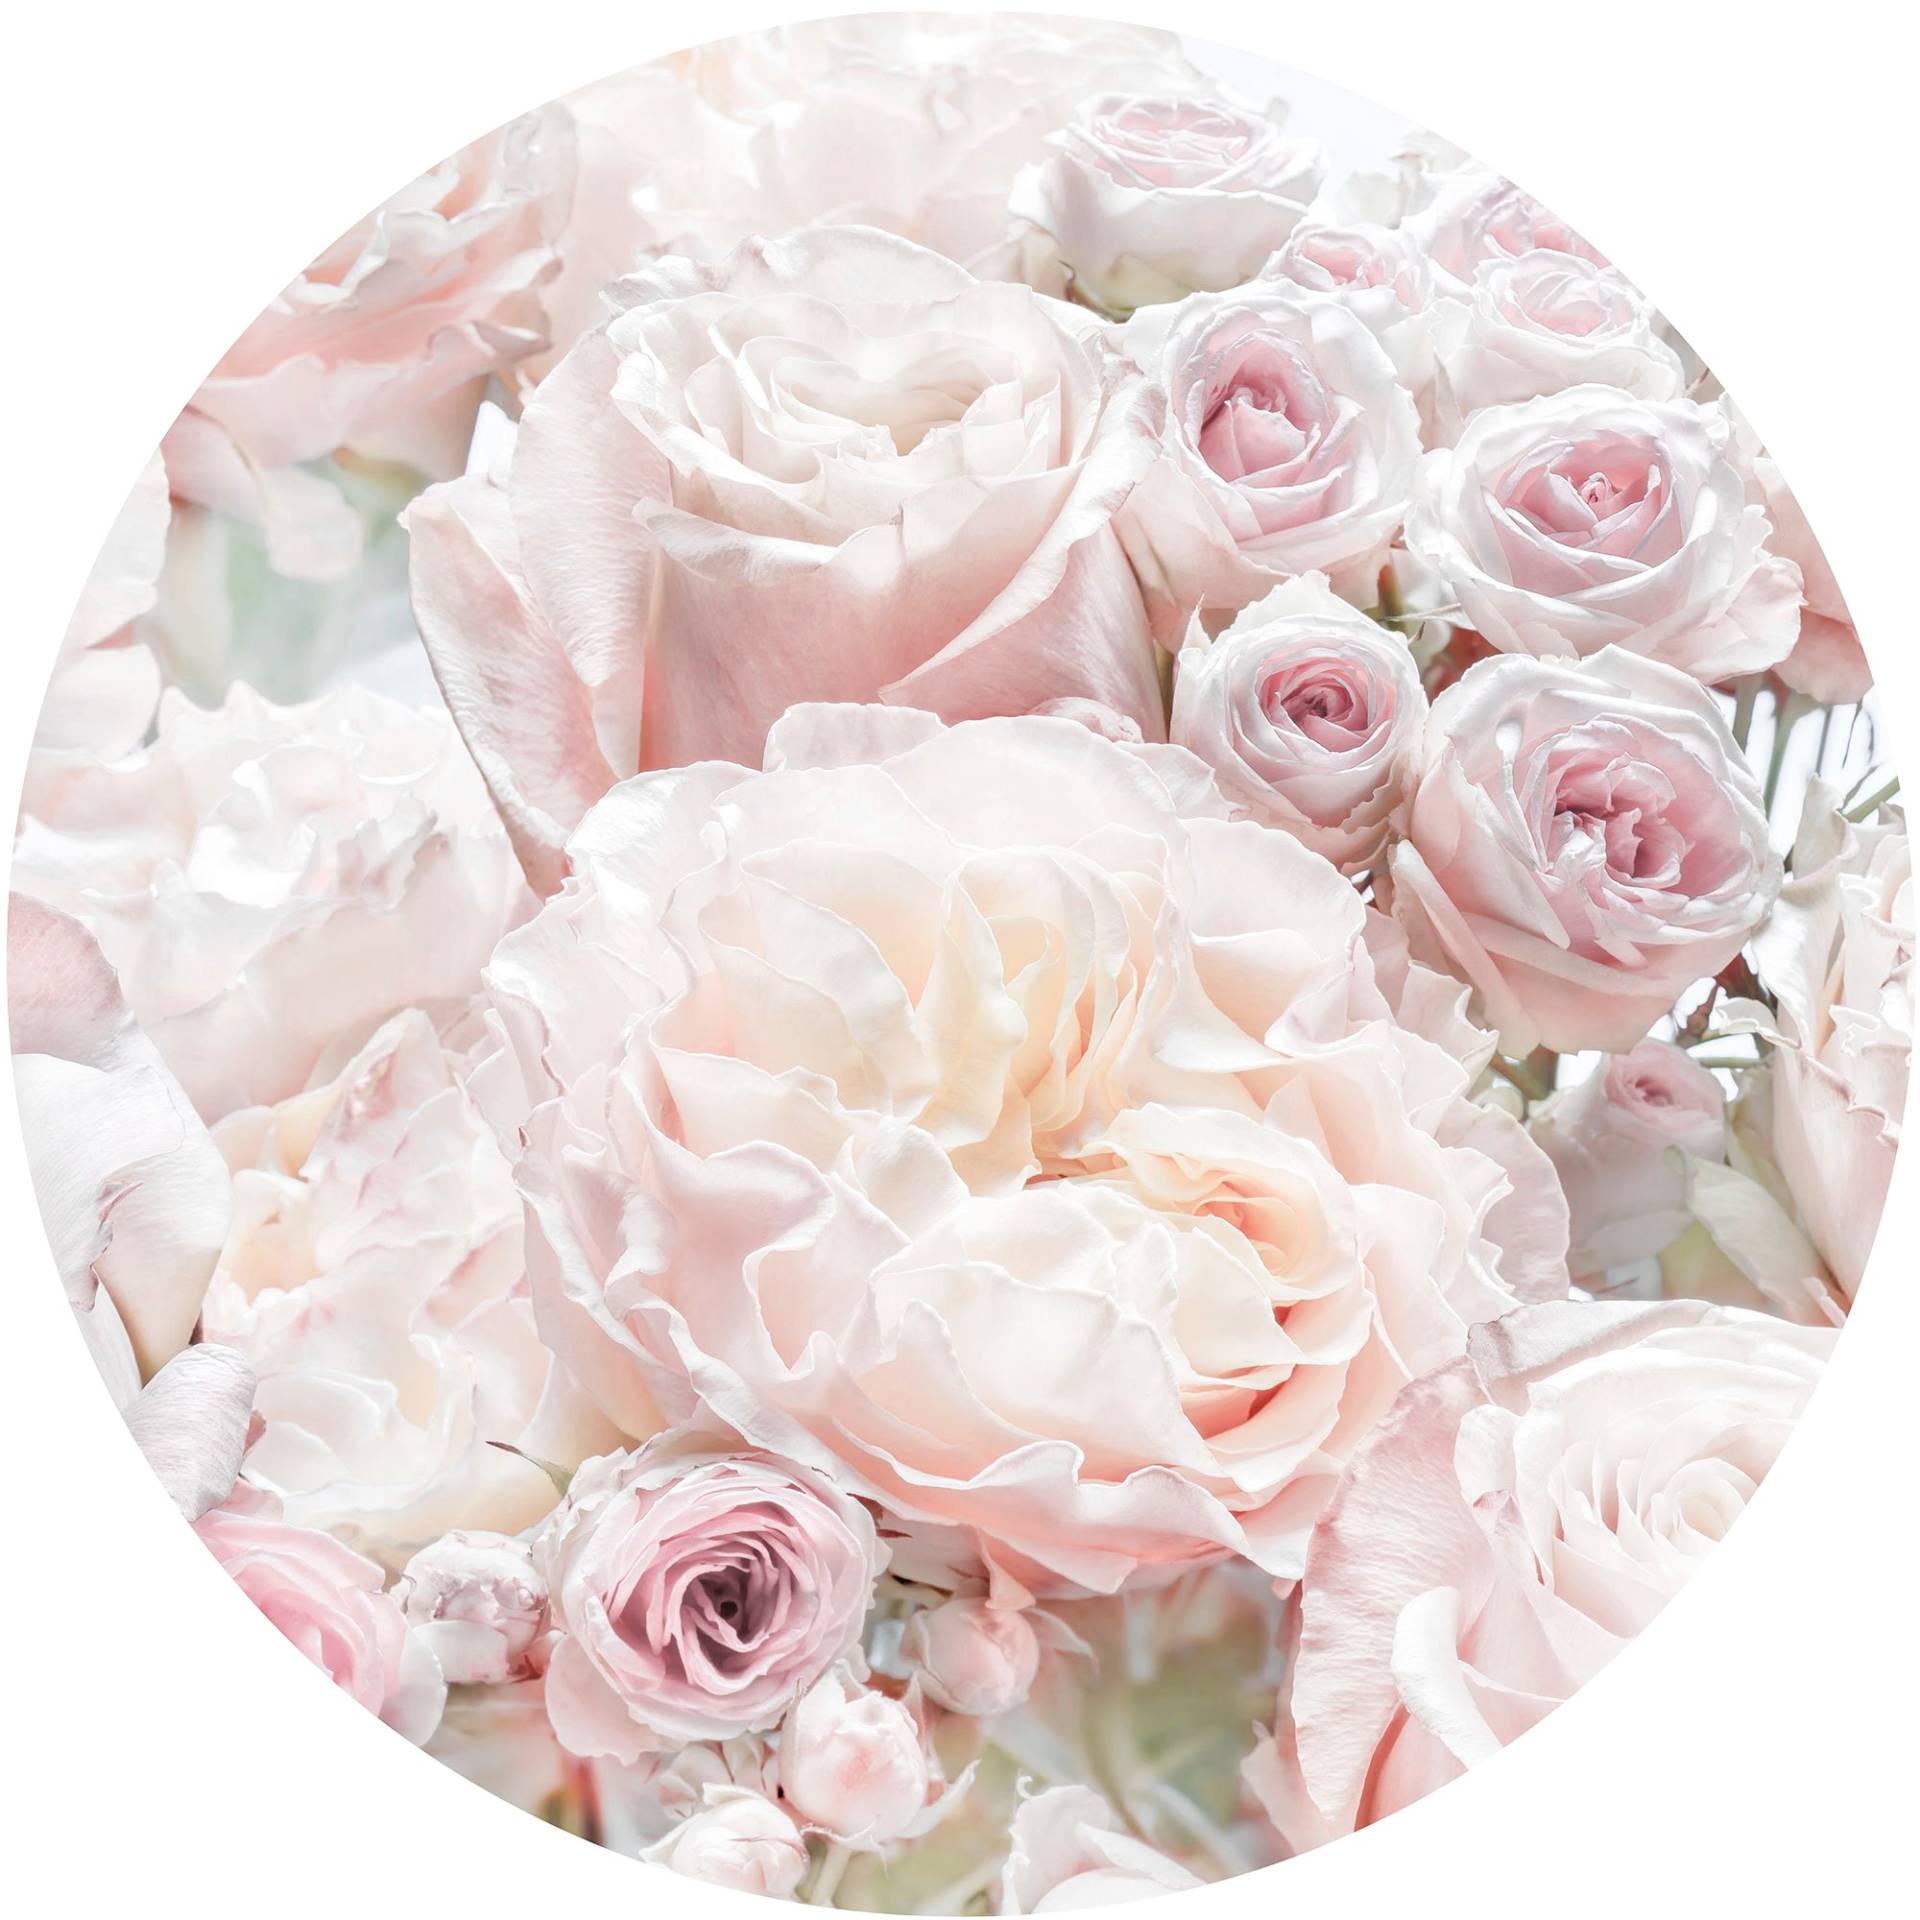 Komar Fototapete "Pink and Cream Roses" von Komar